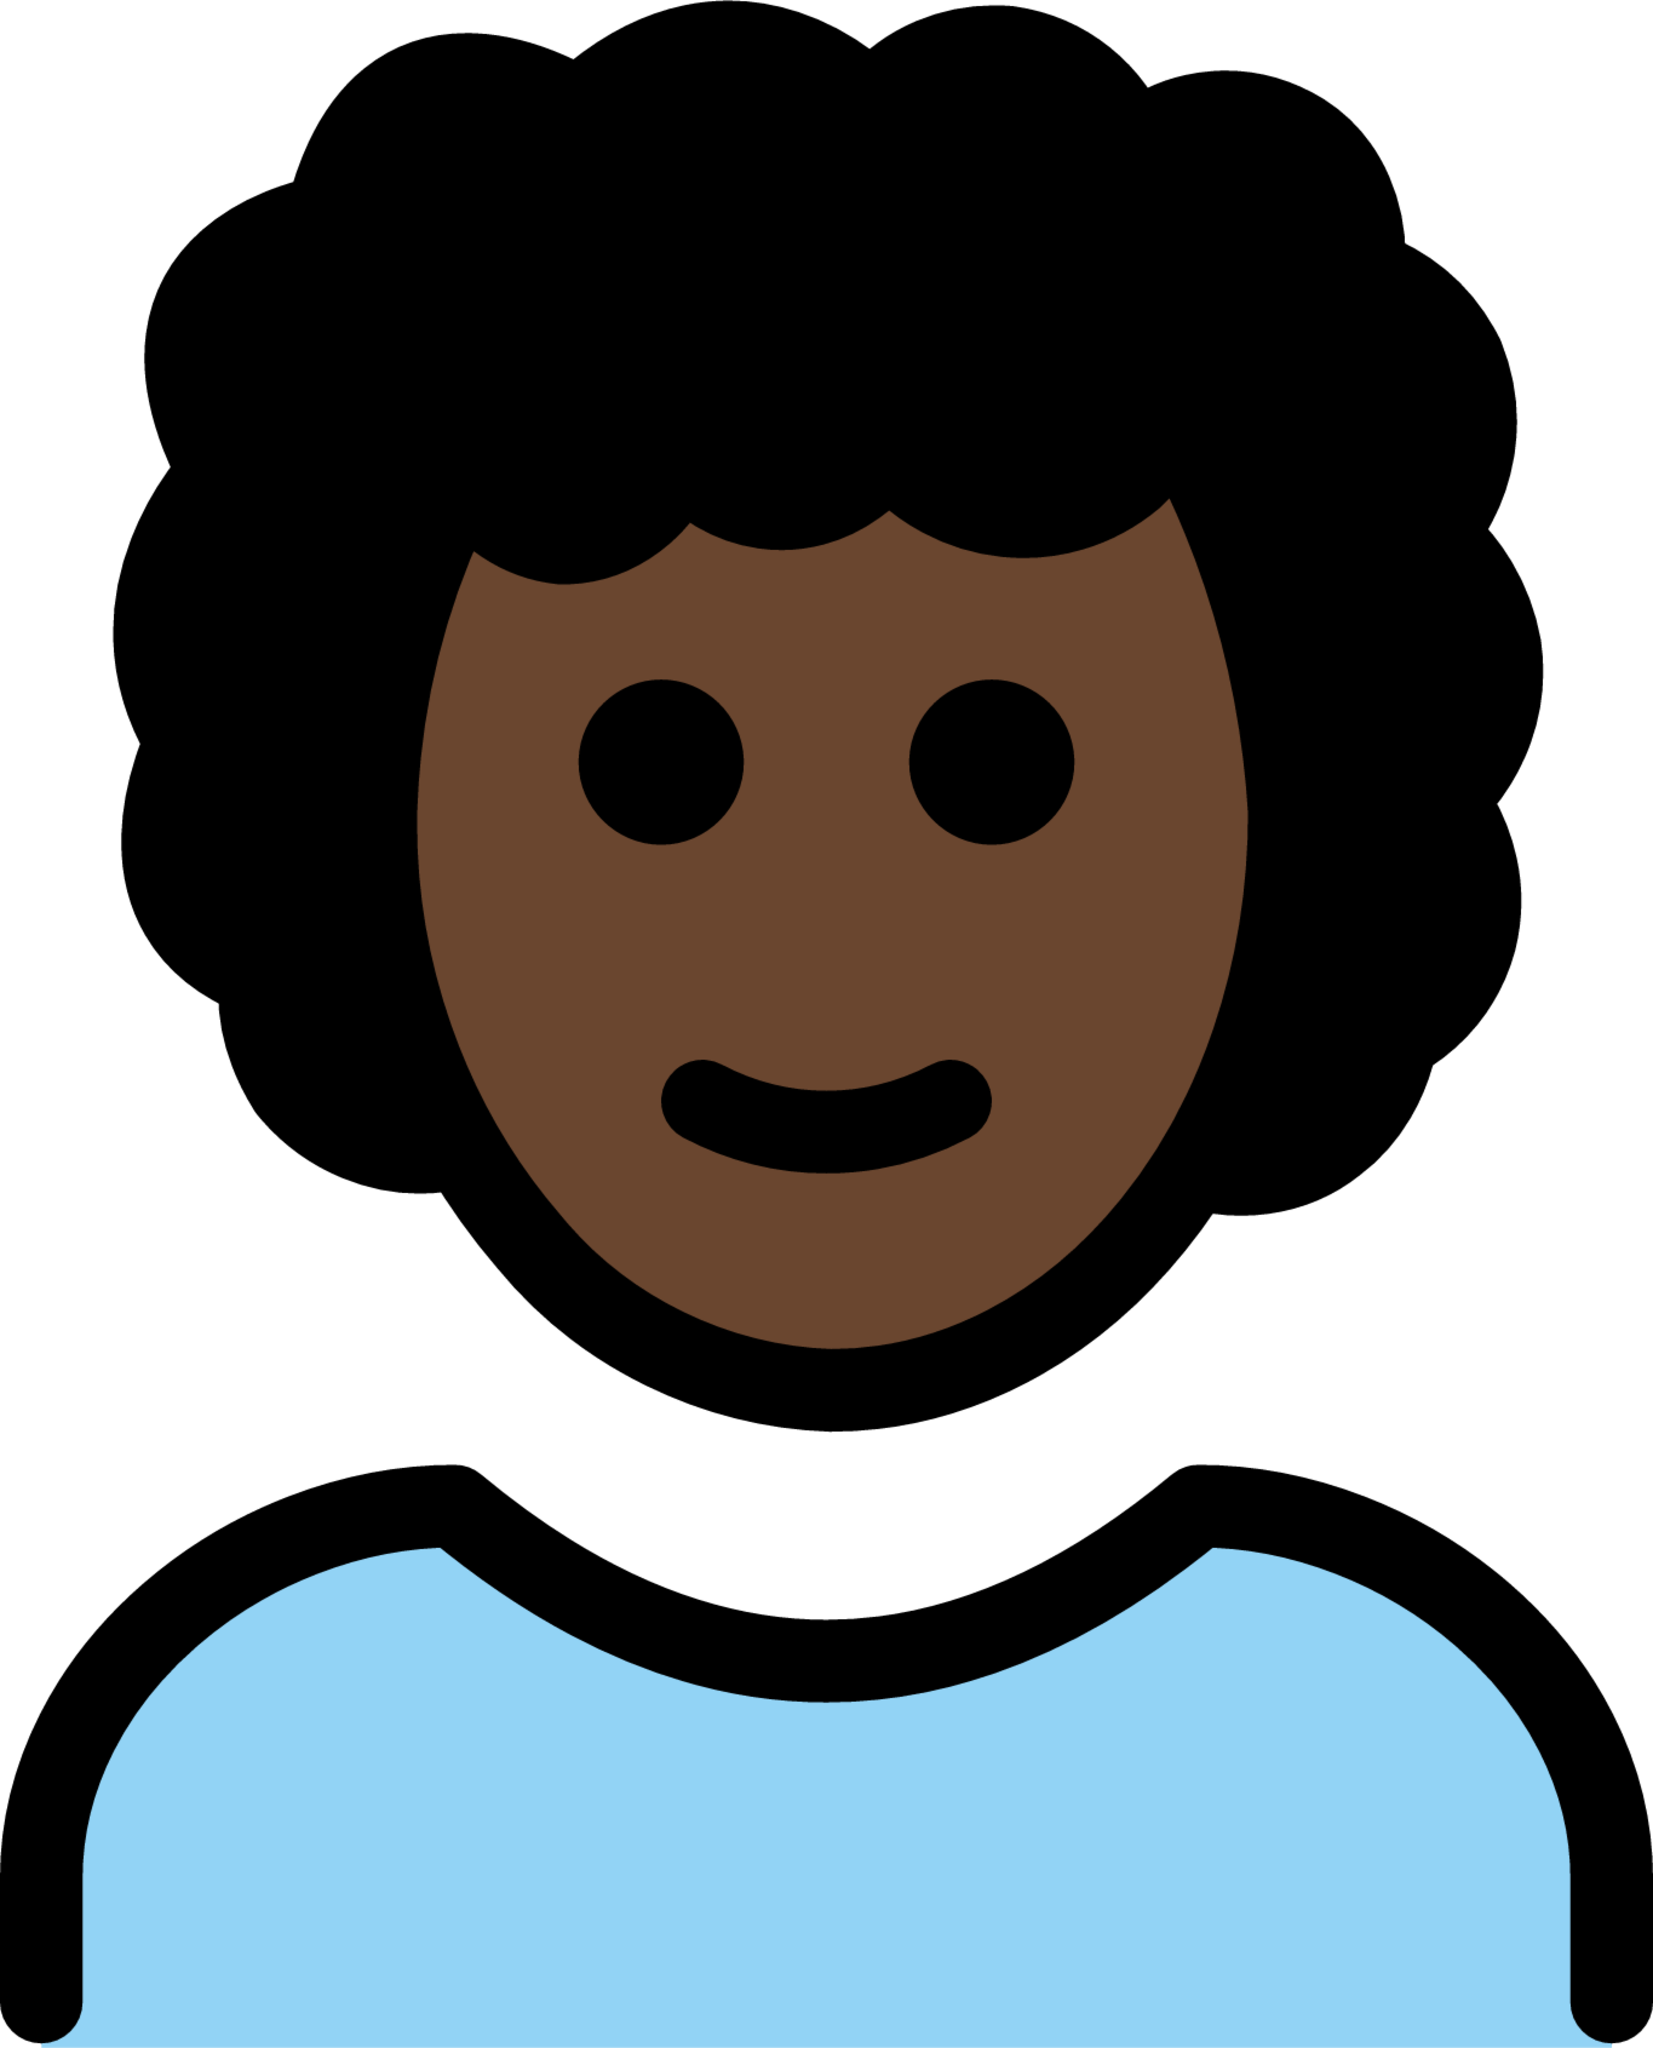 person: dark skin tone, curly hair emoji